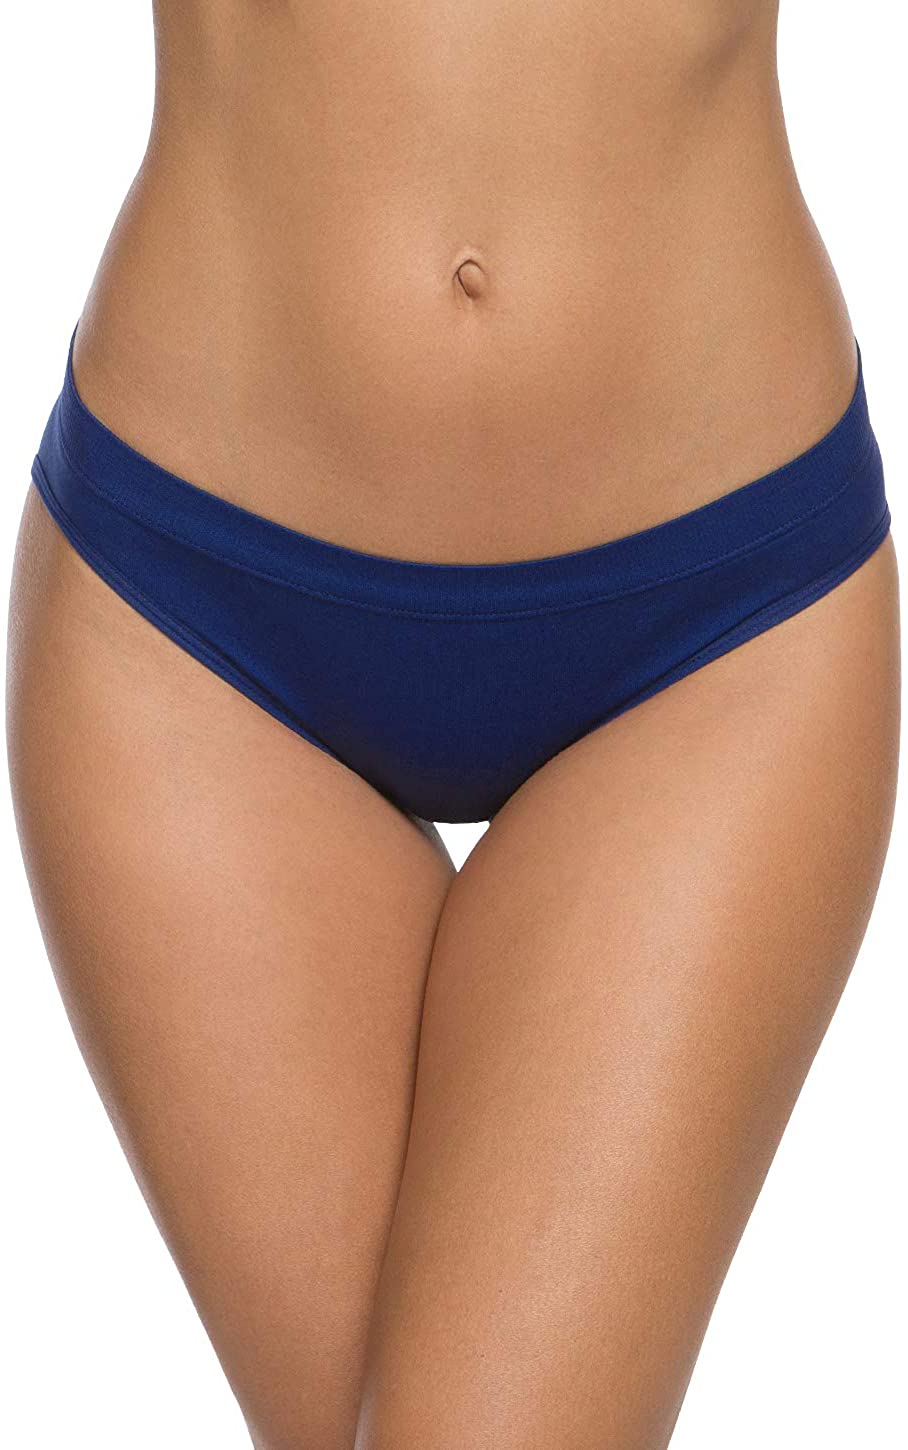 Wealurre Womens Hipster Panties Underwear Low Rise Bikini Panty Multipack Ebay